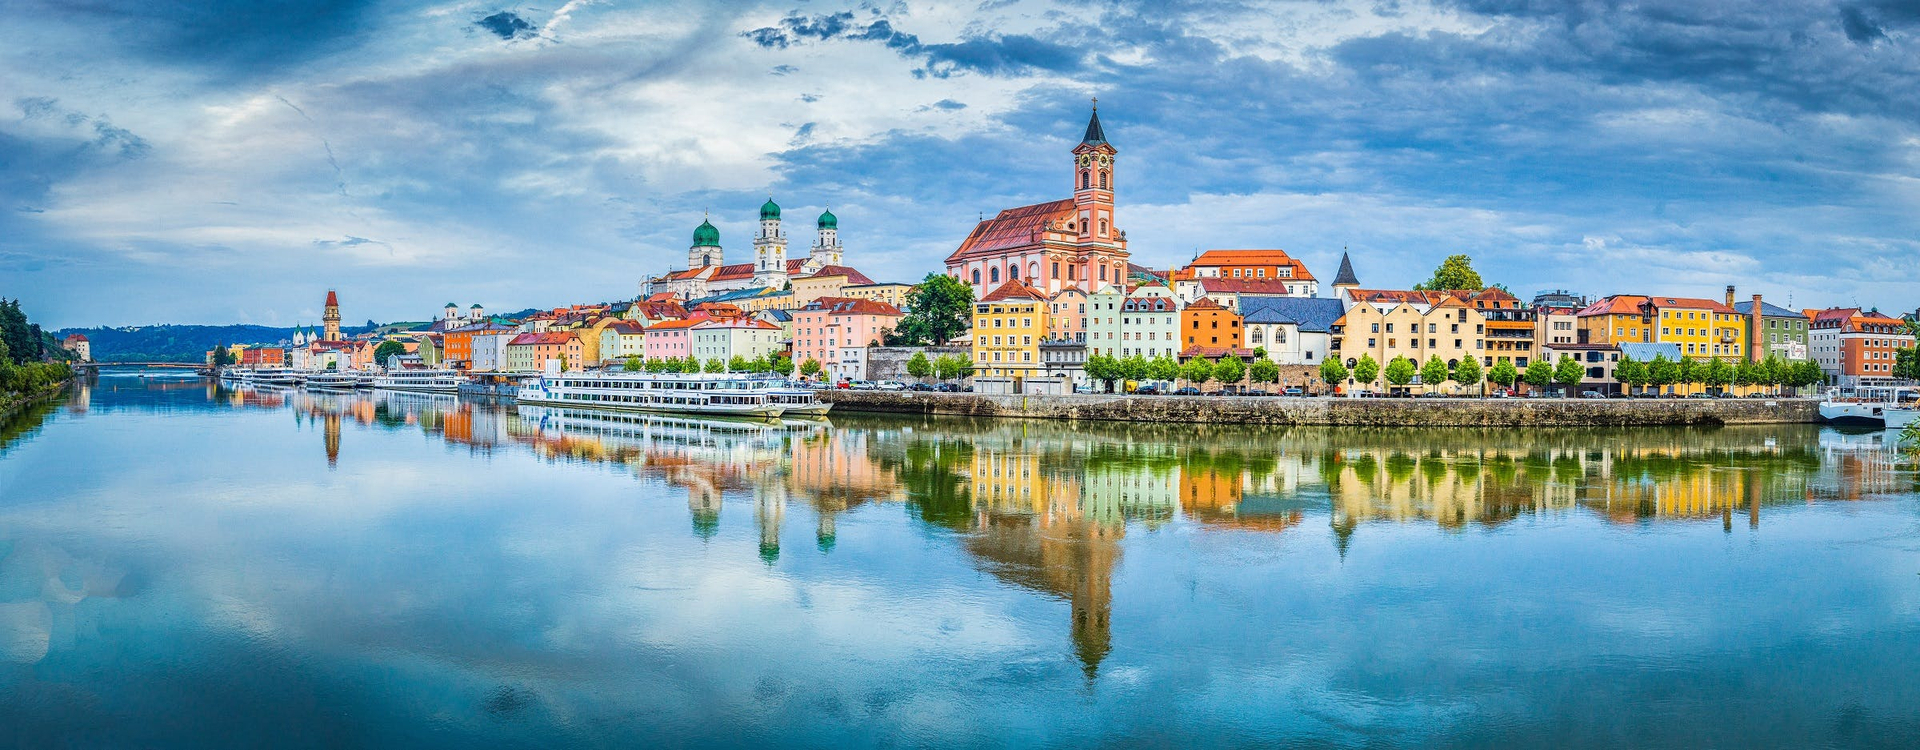 Tour romántico en Passau